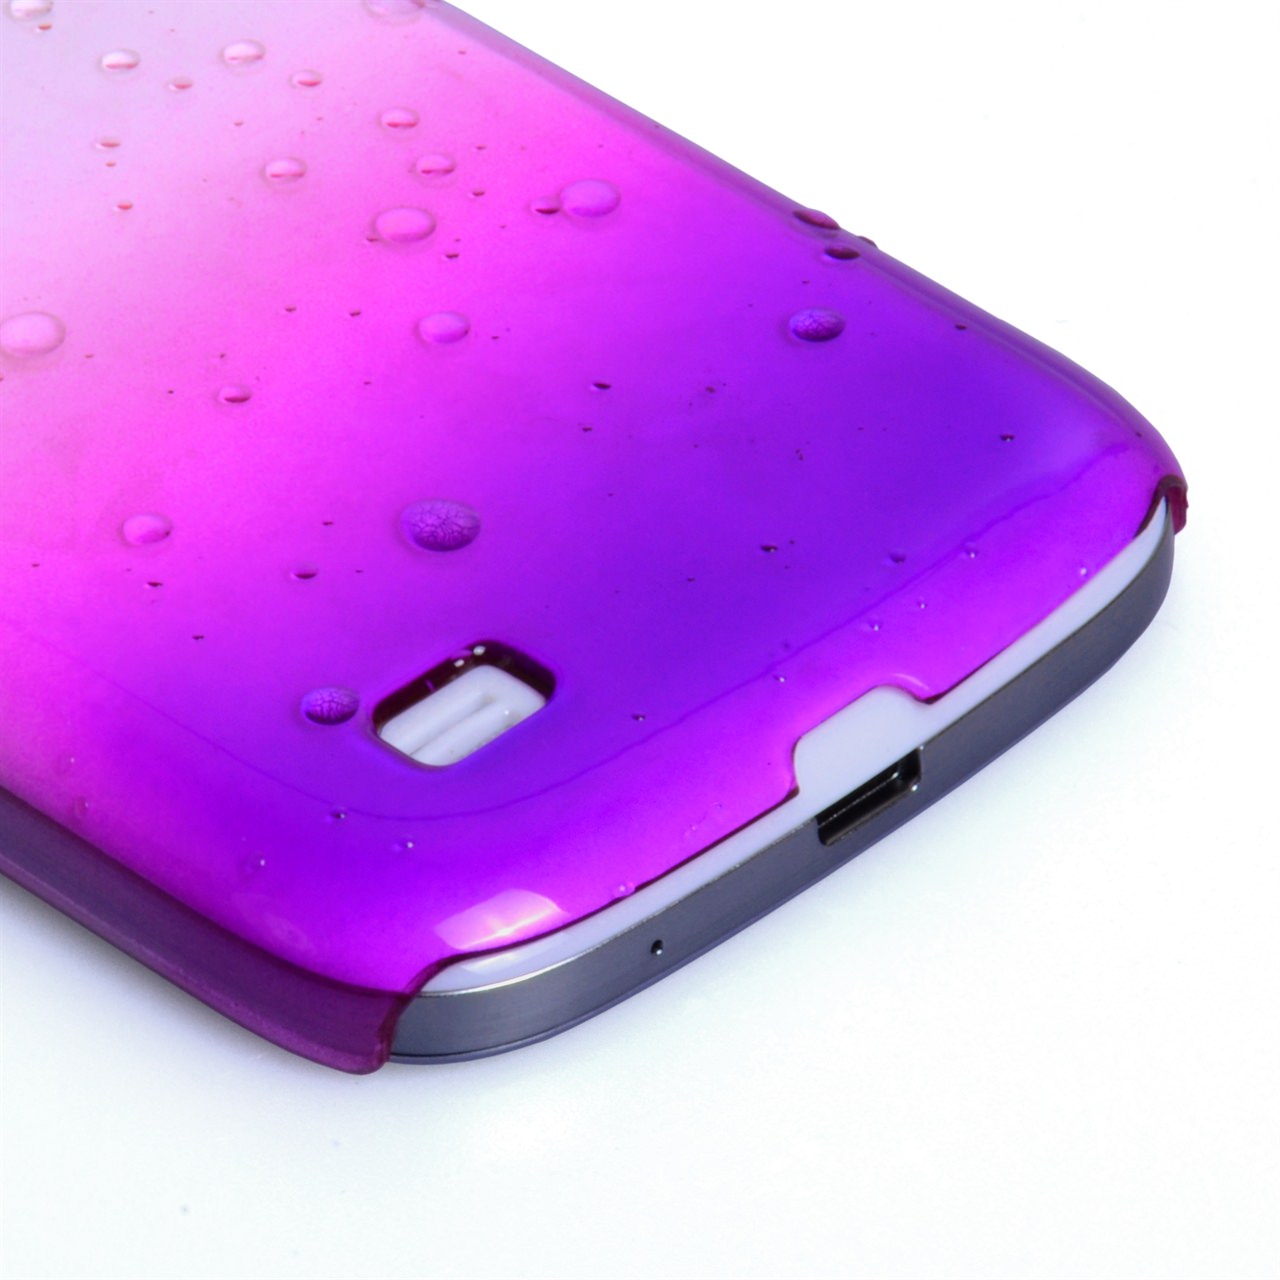 YouSave Accessories Samsung Galaxy S4 Mini Purple Raindrop Hard Case